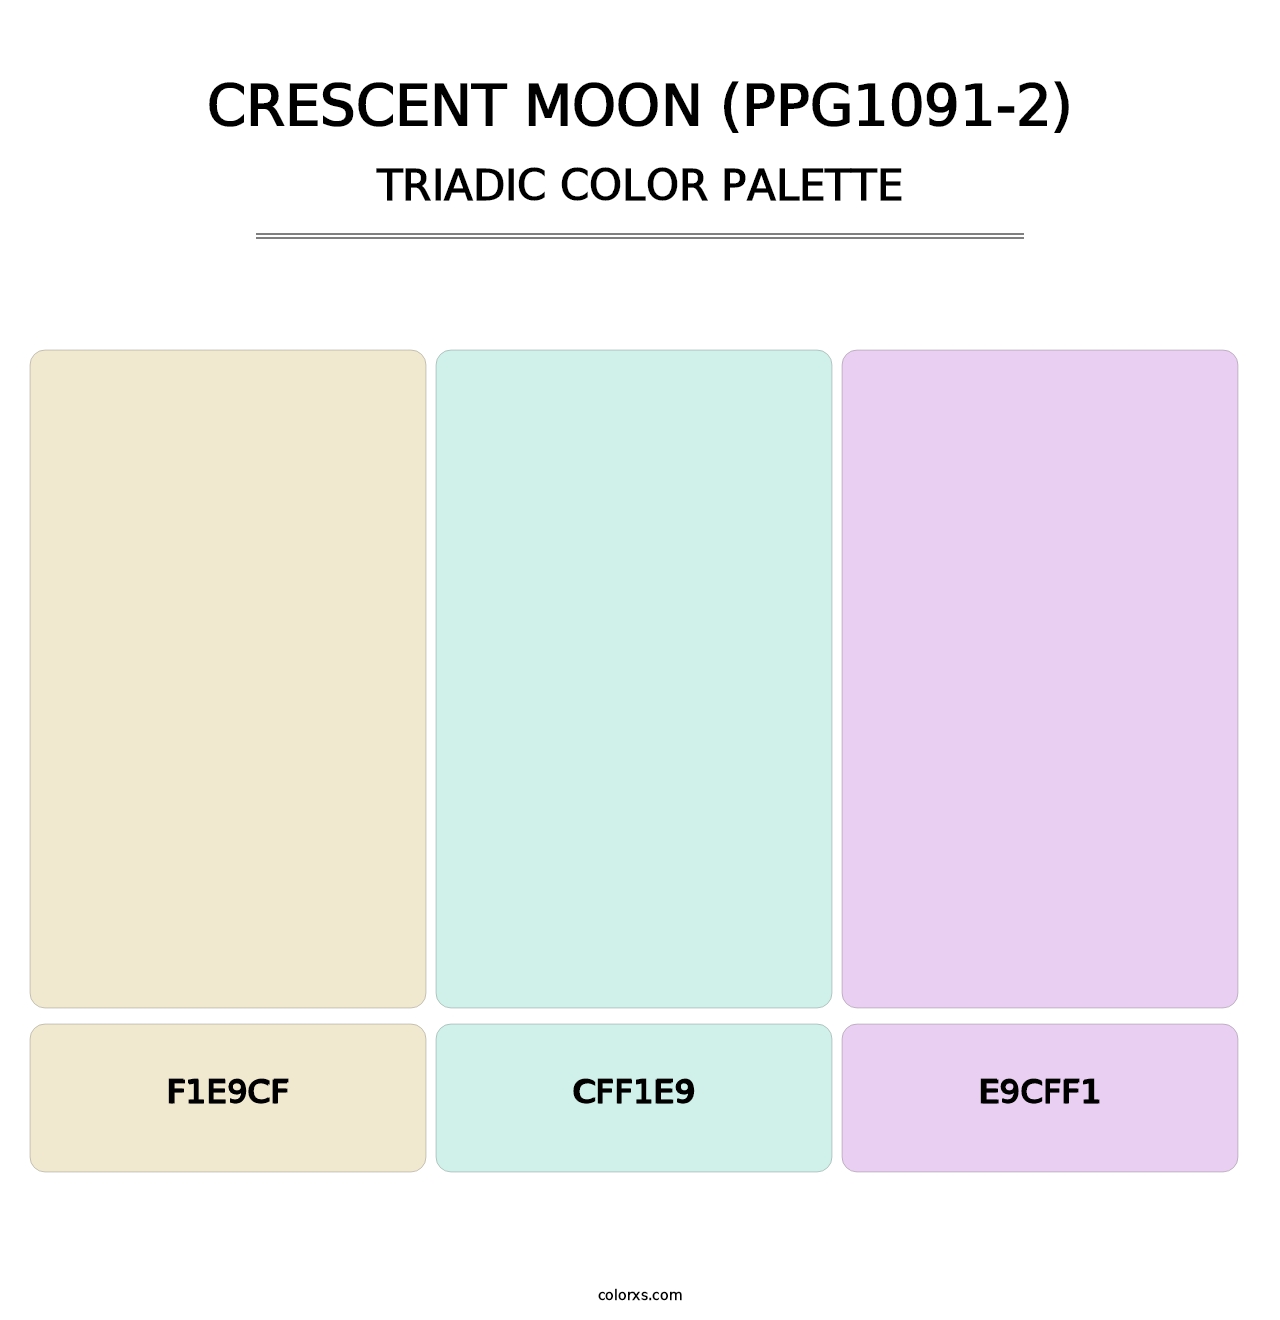 Crescent Moon (PPG1091-2) - Triadic Color Palette